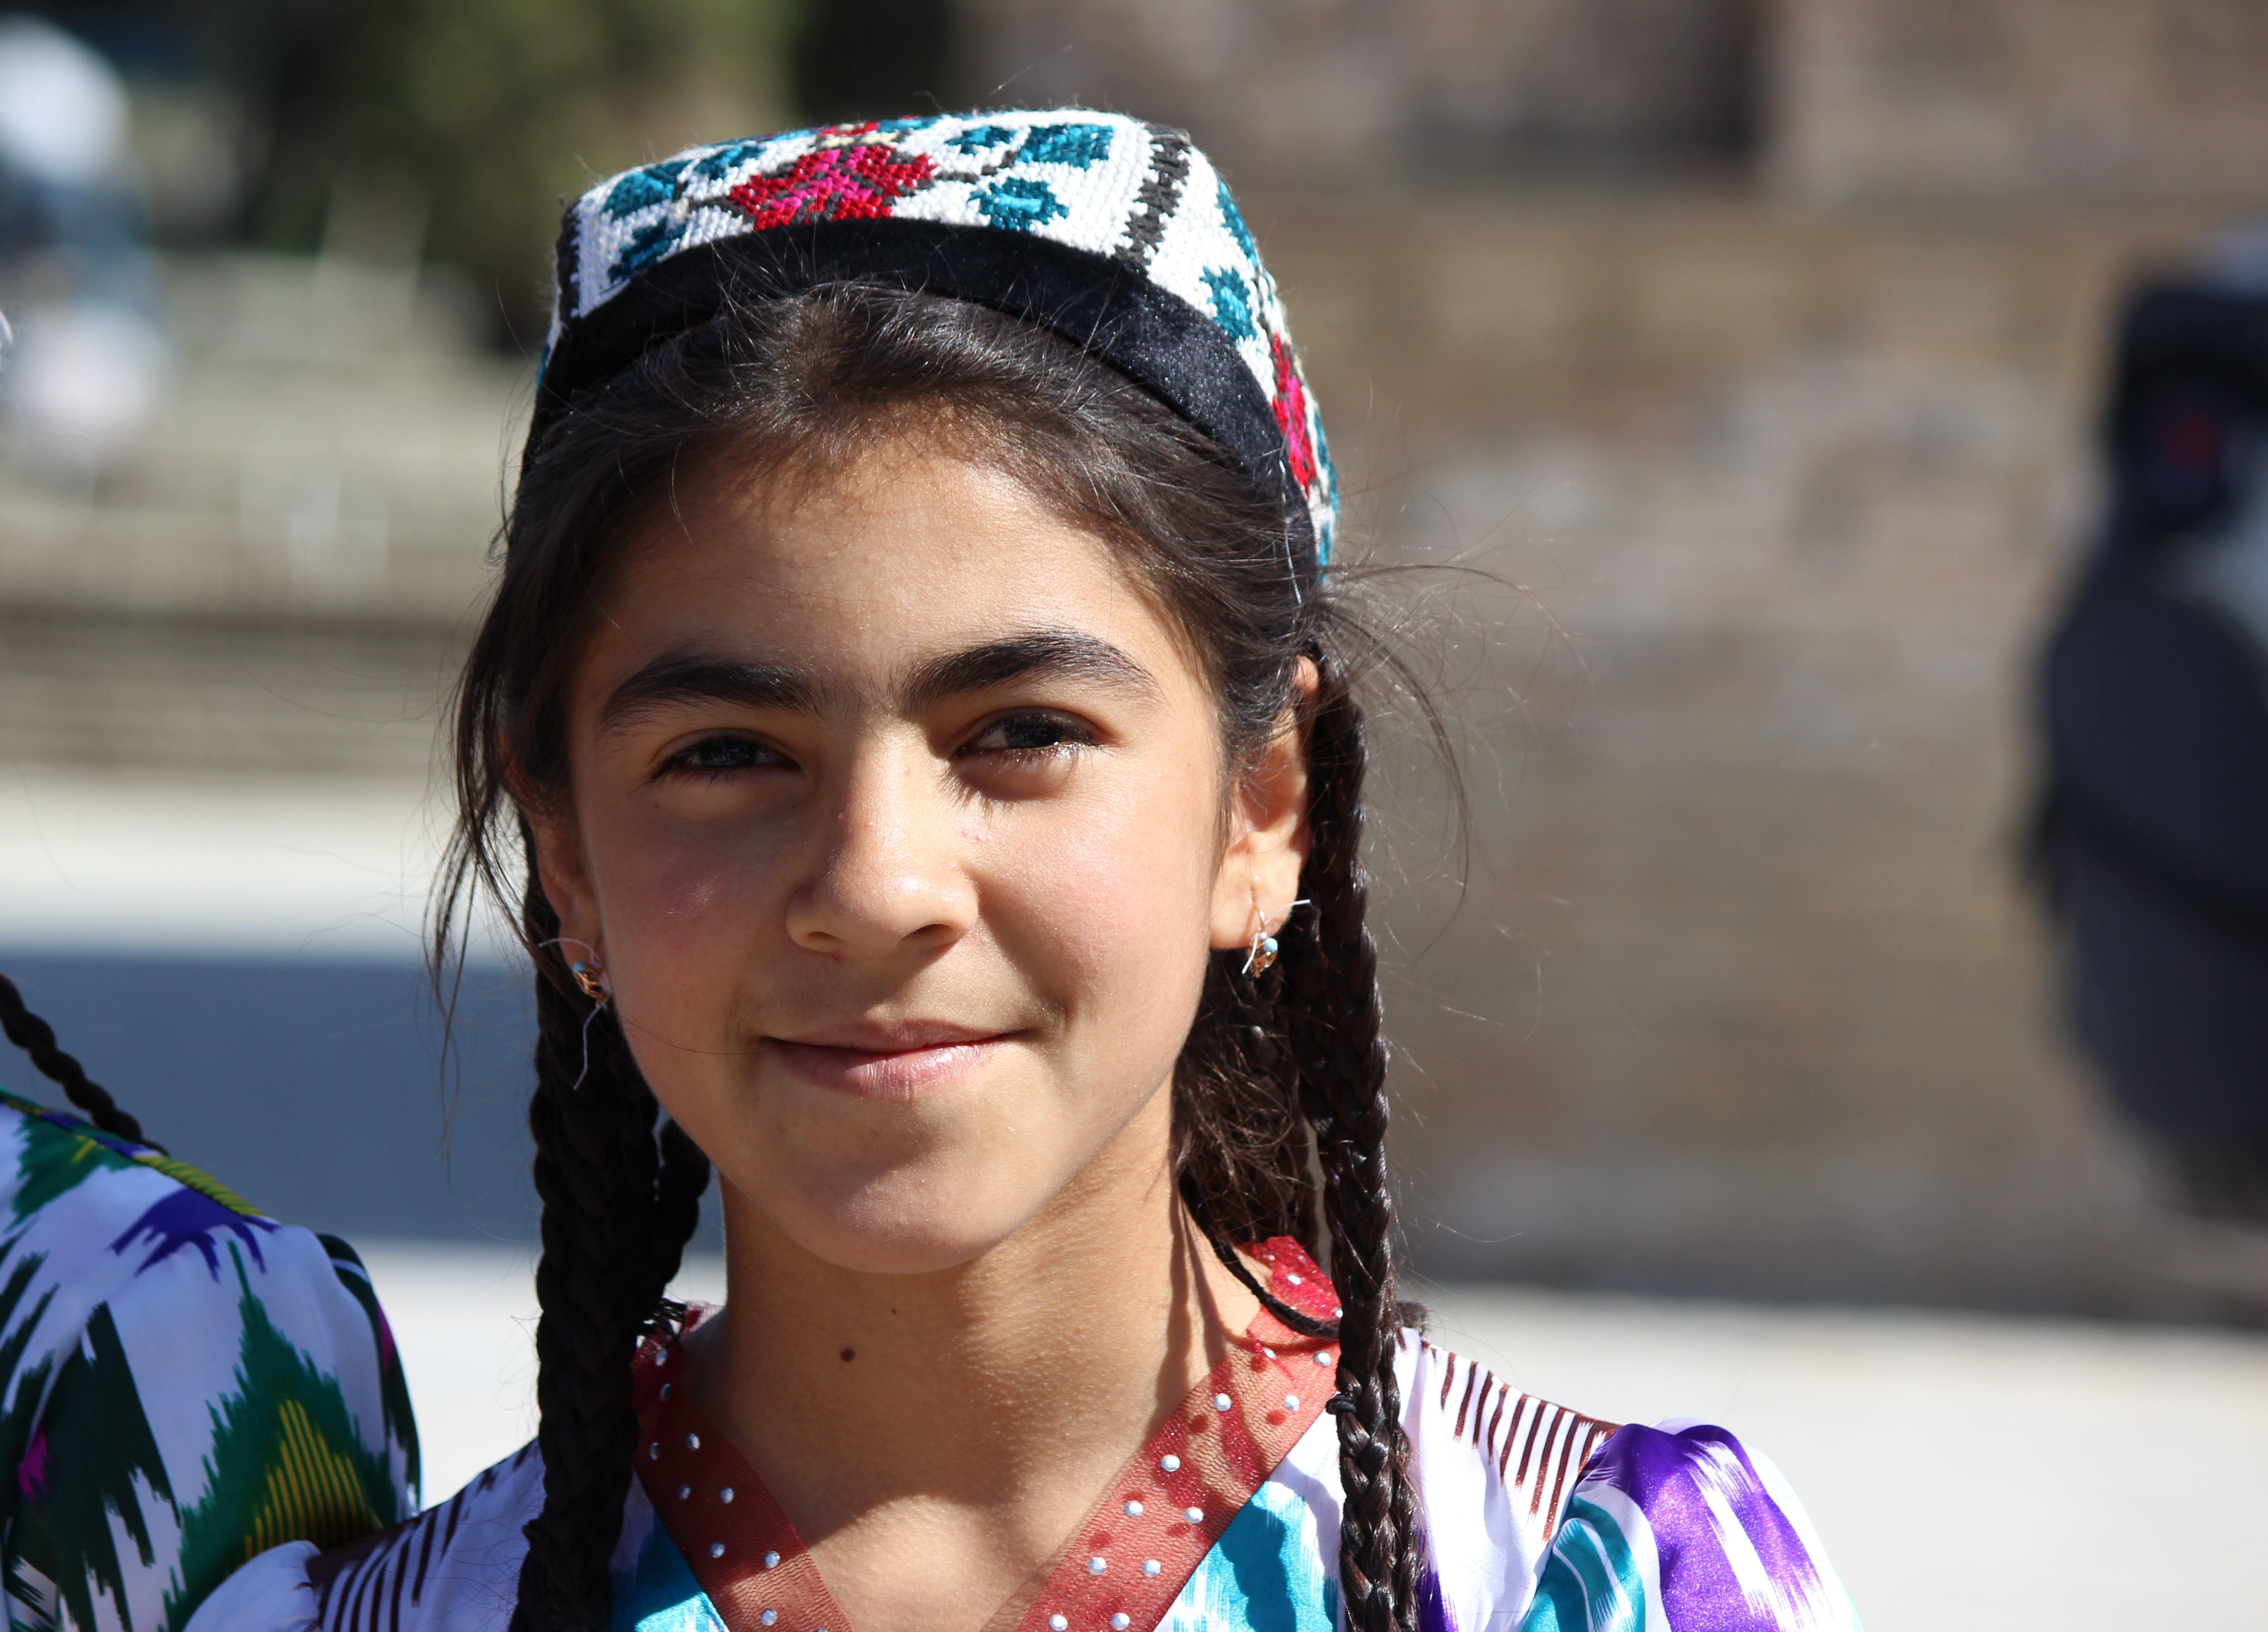 Молодая девушка таджик. Тутинисо Аллаева. Узбекские женщины. Таджикские женщины. Узбечки фото.